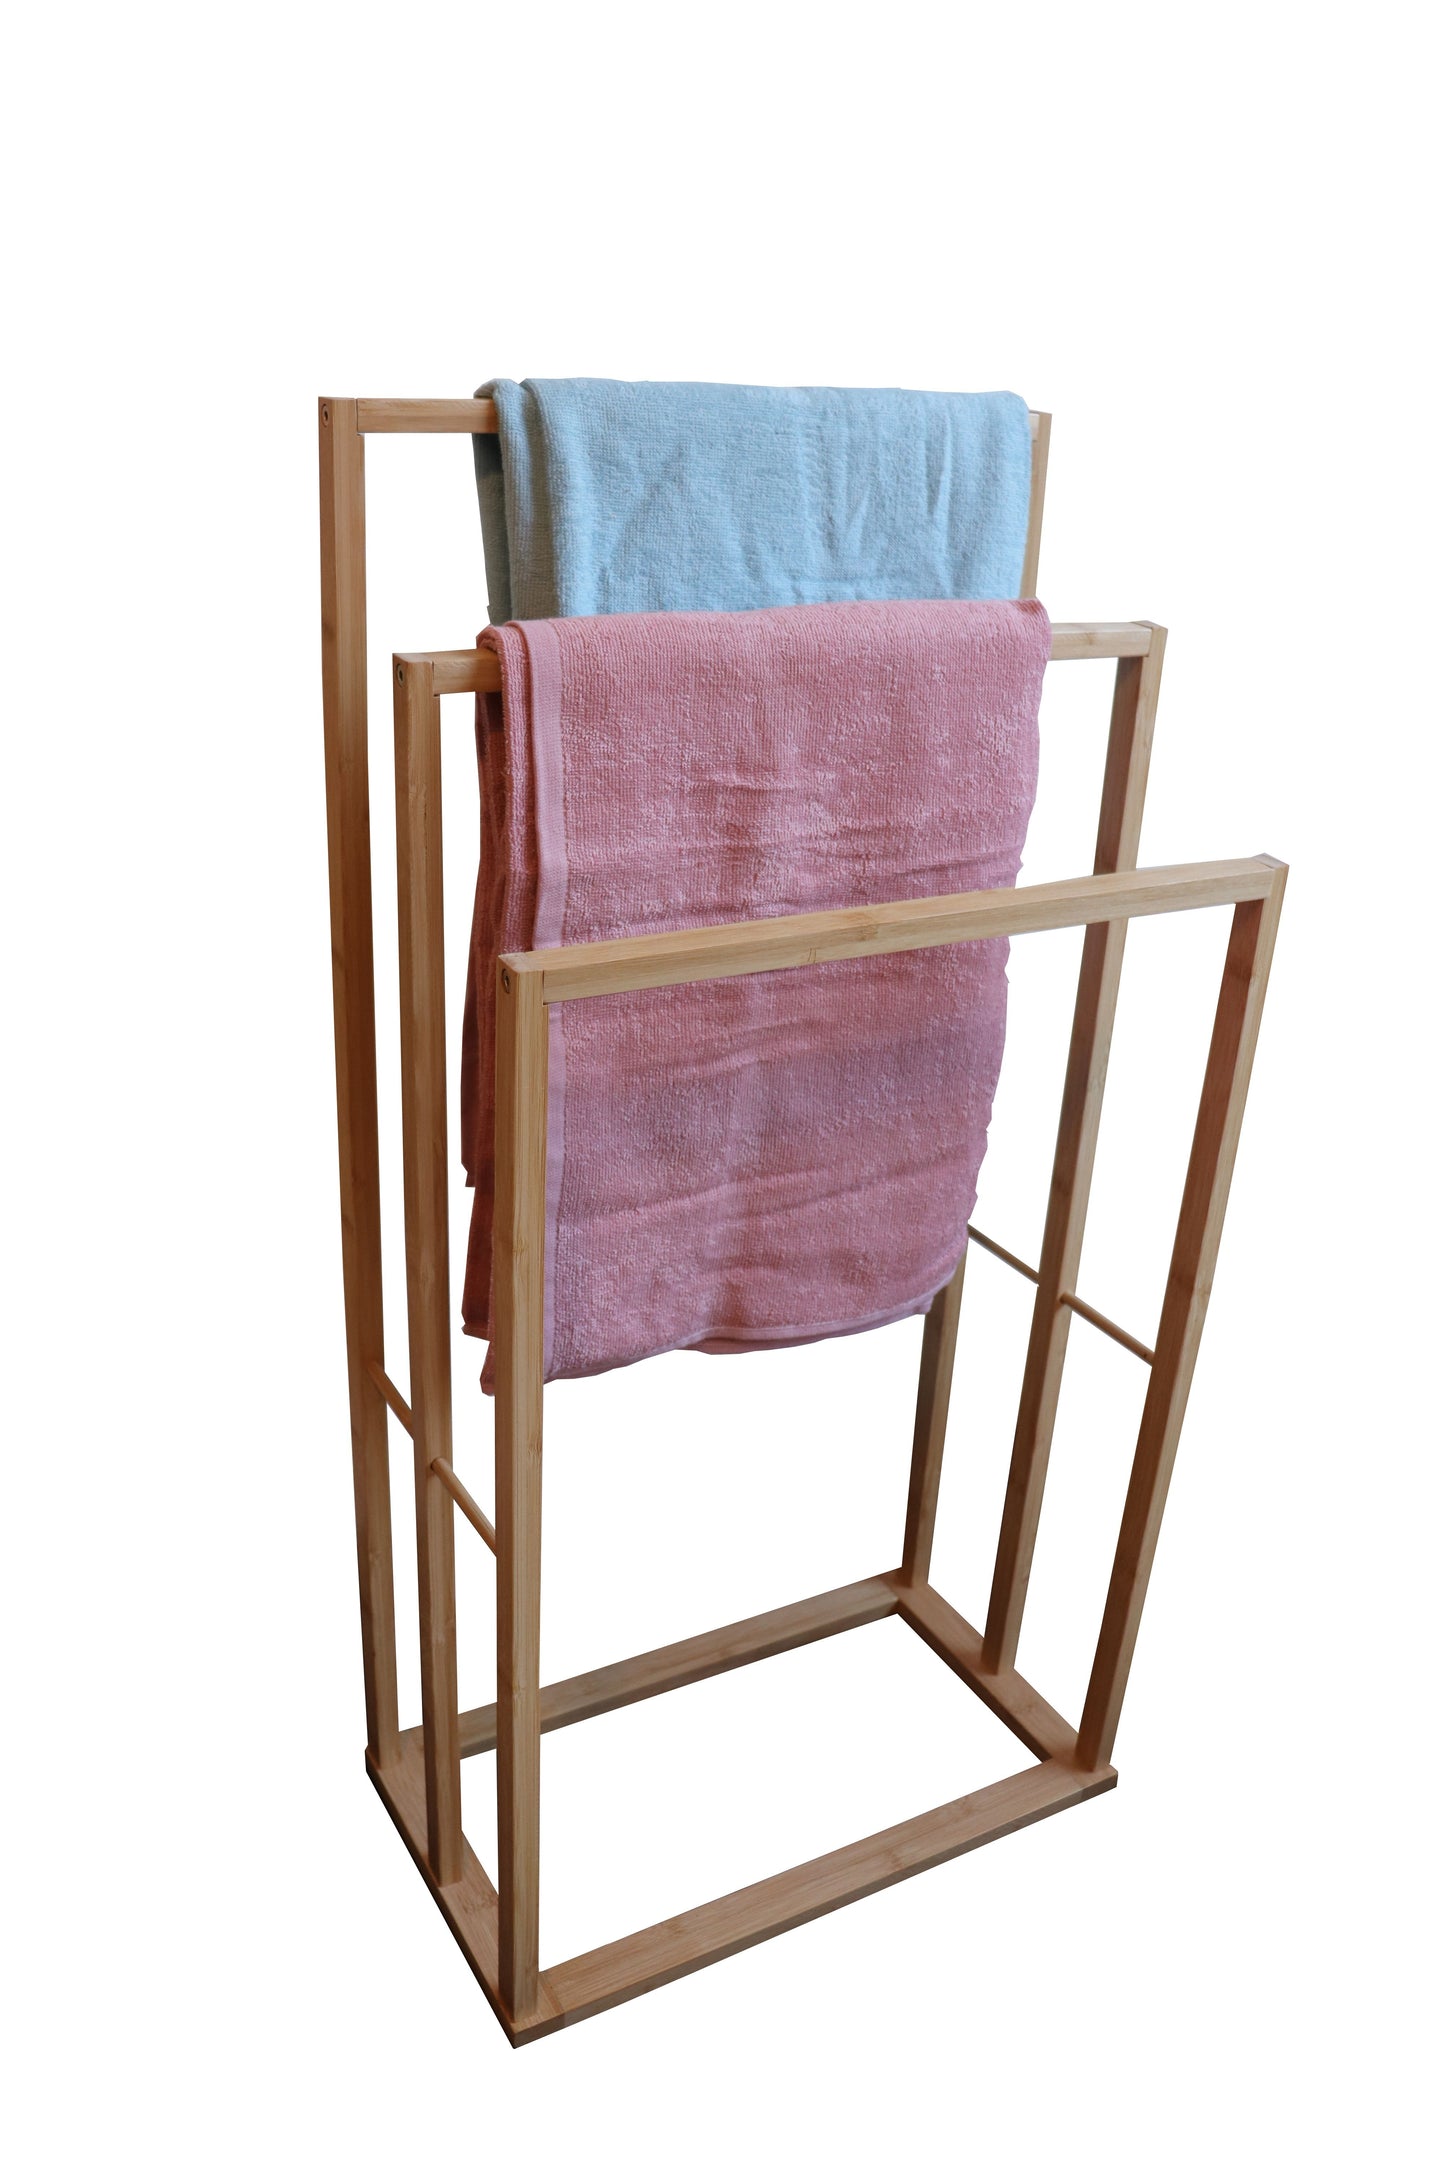 Bamboo Towel Bar Holder Rack 3-Tier Freestanding for Bathroom and Bedroom - BM House & Garden